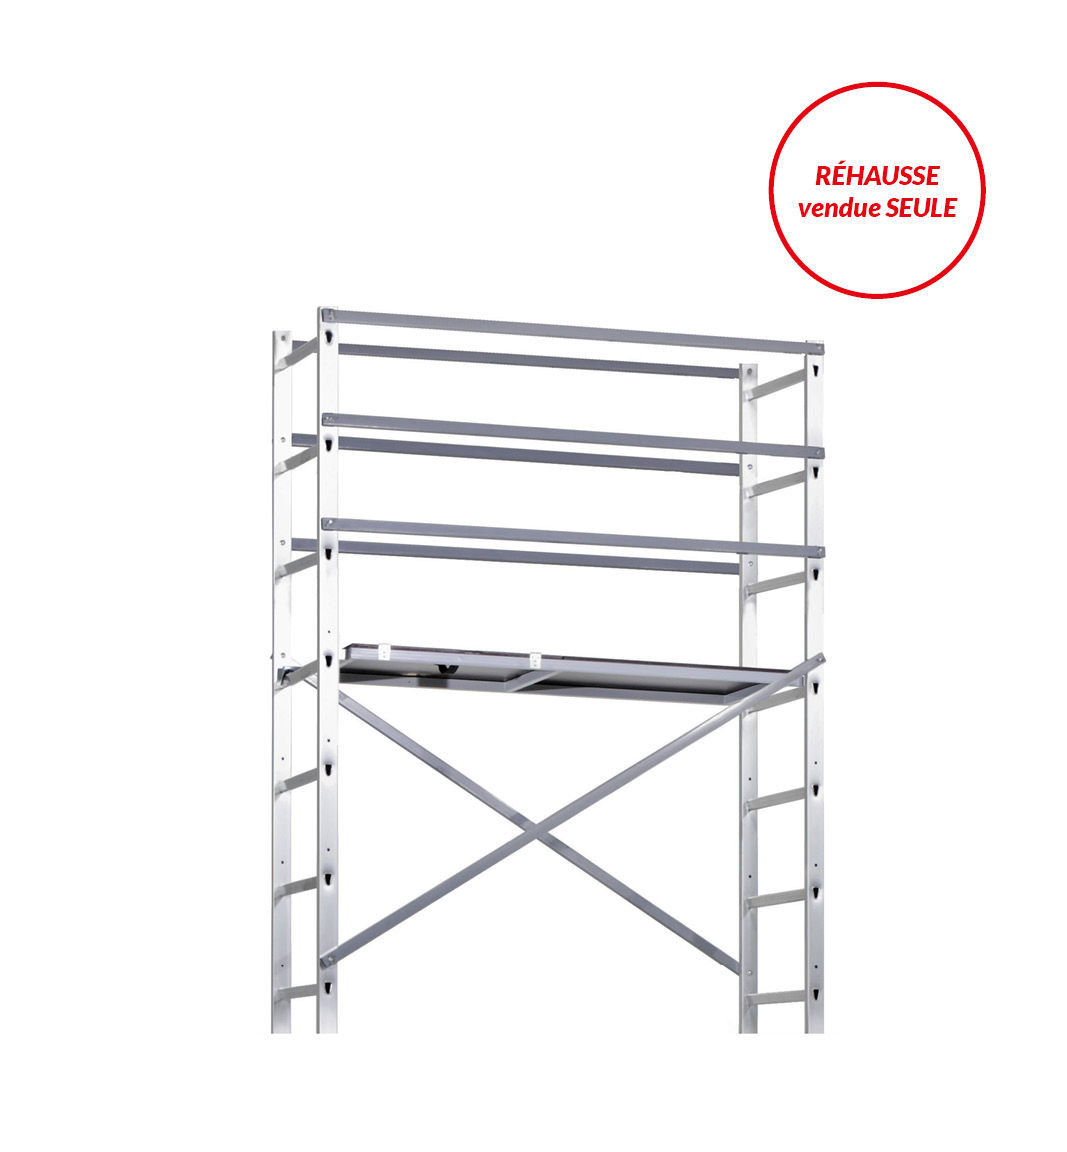 rehausse-echafaudage-escalier-6m-aluminium-hailo-hobbystep-h6-vendue-seule